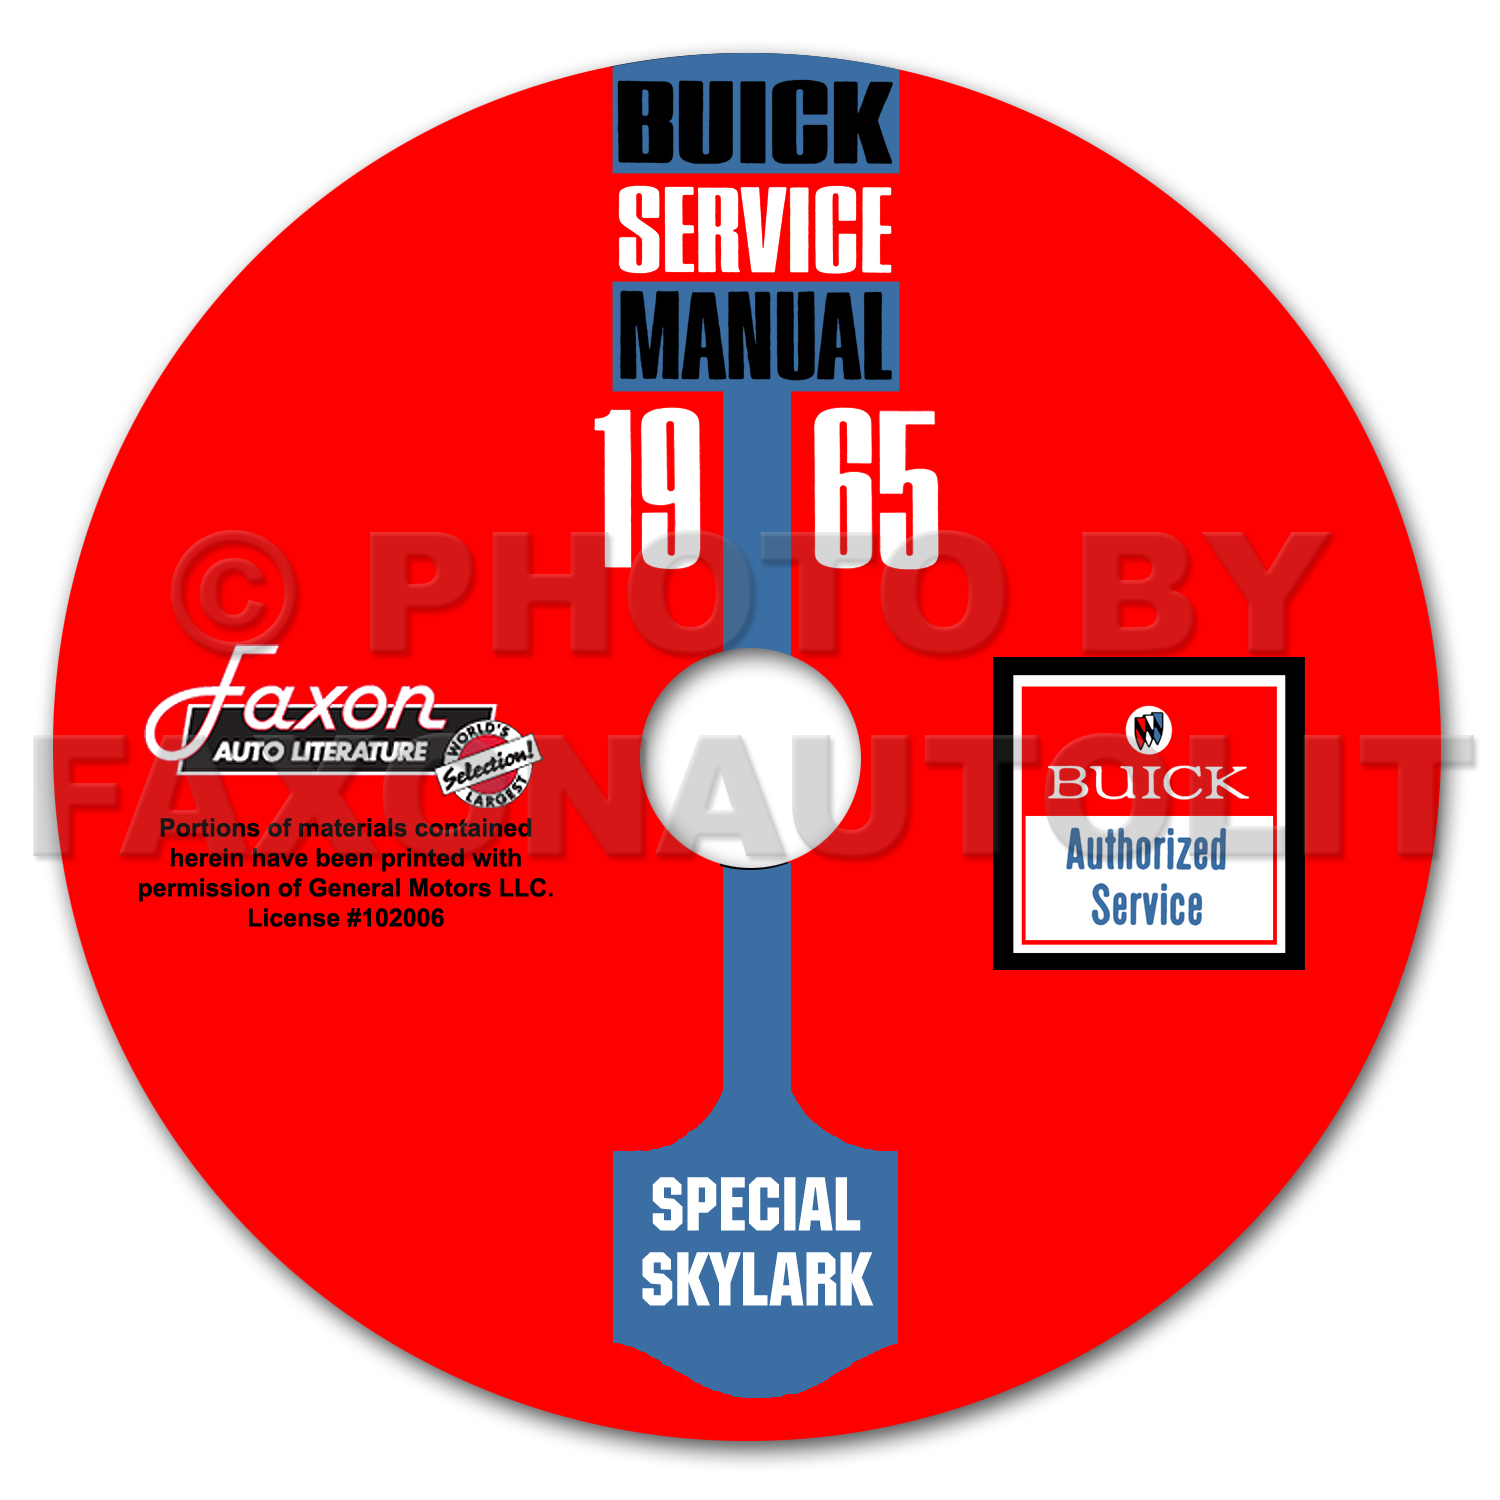 1965 Buick CD-ROM Shop Manual, all models 